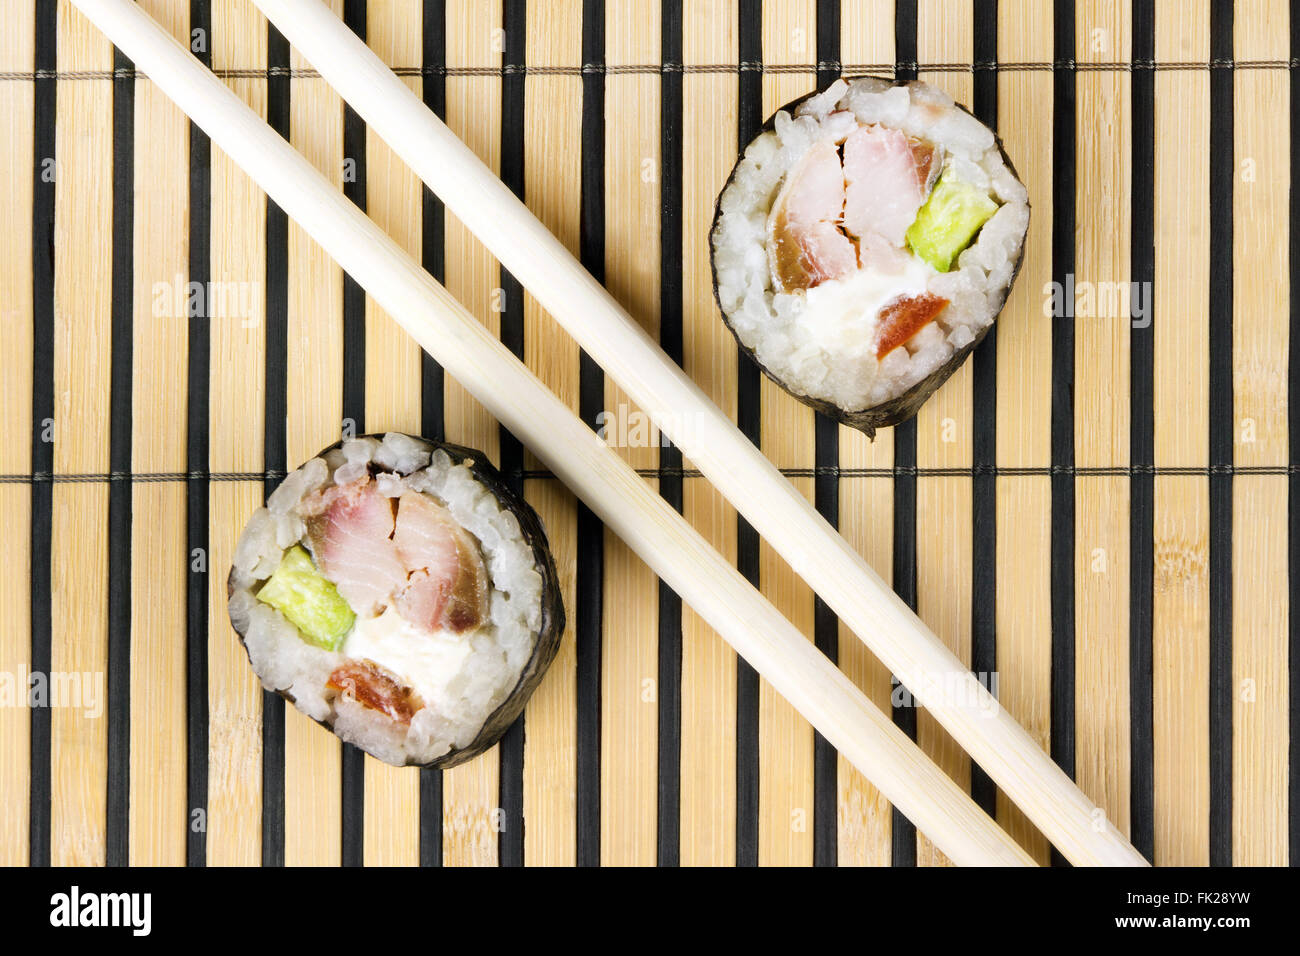 File:Okami variety sushi platter.JPG - Wikimedia Commons